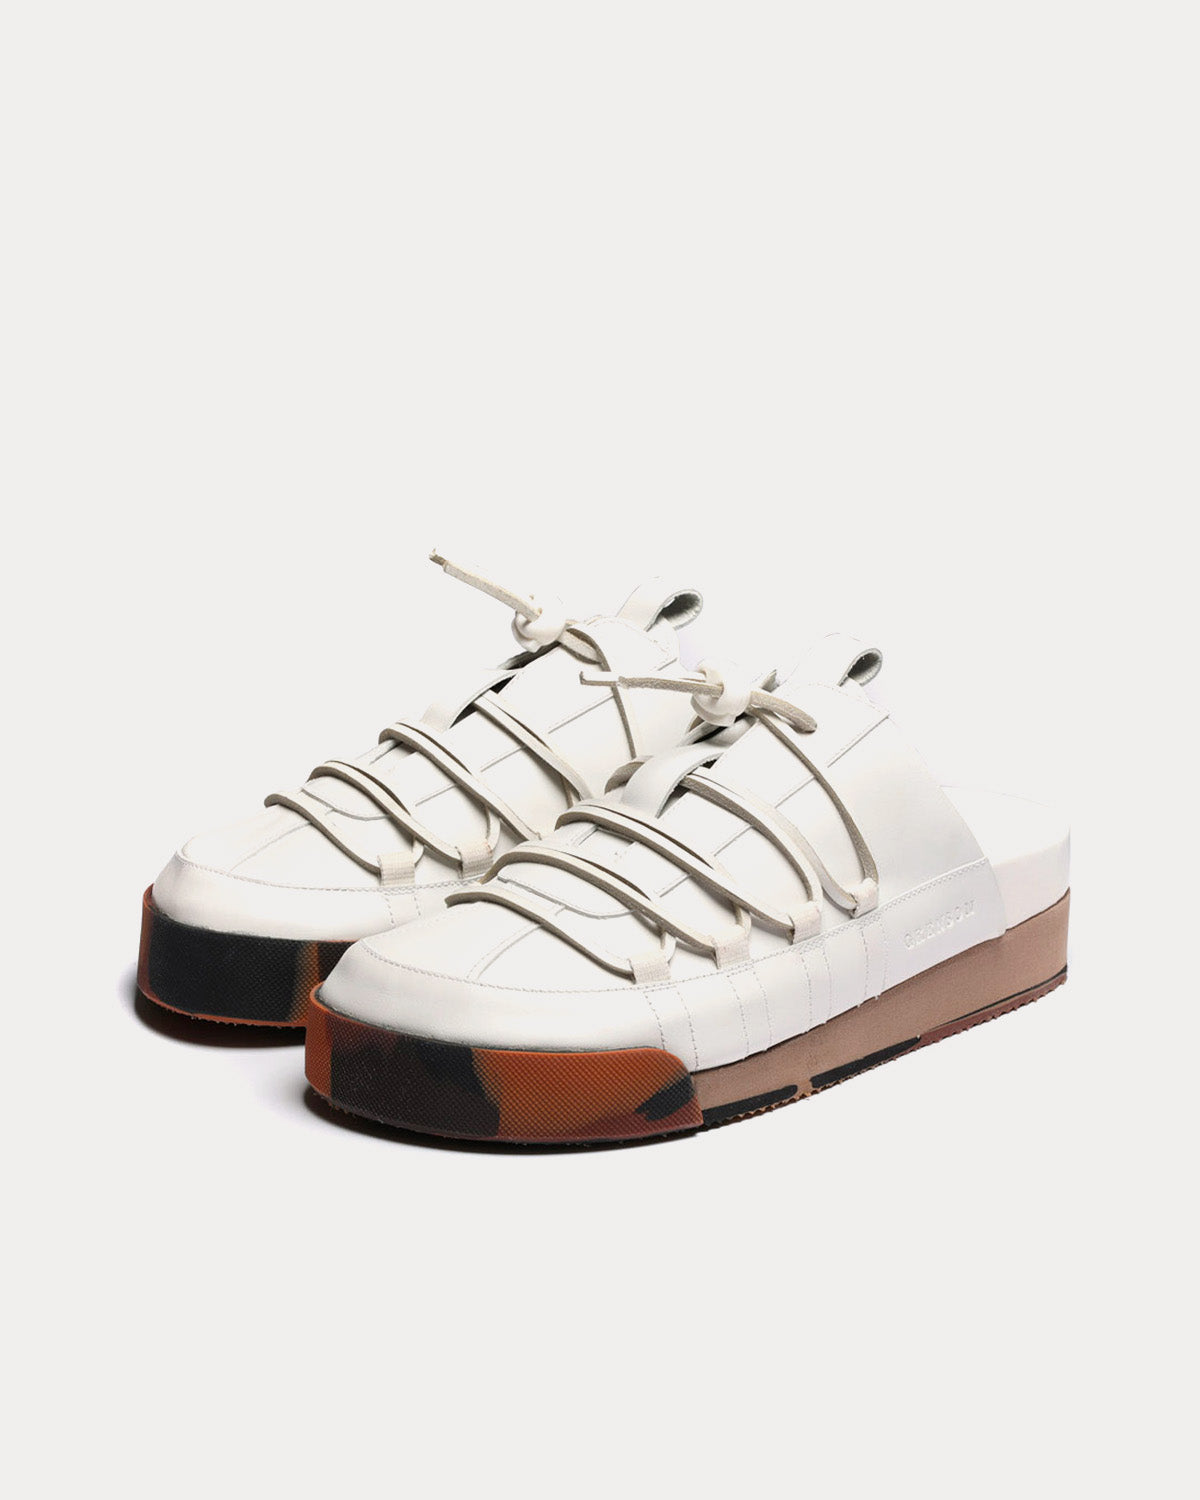 Grenson - Sneaker 75 Leather White Slip On Sneakers